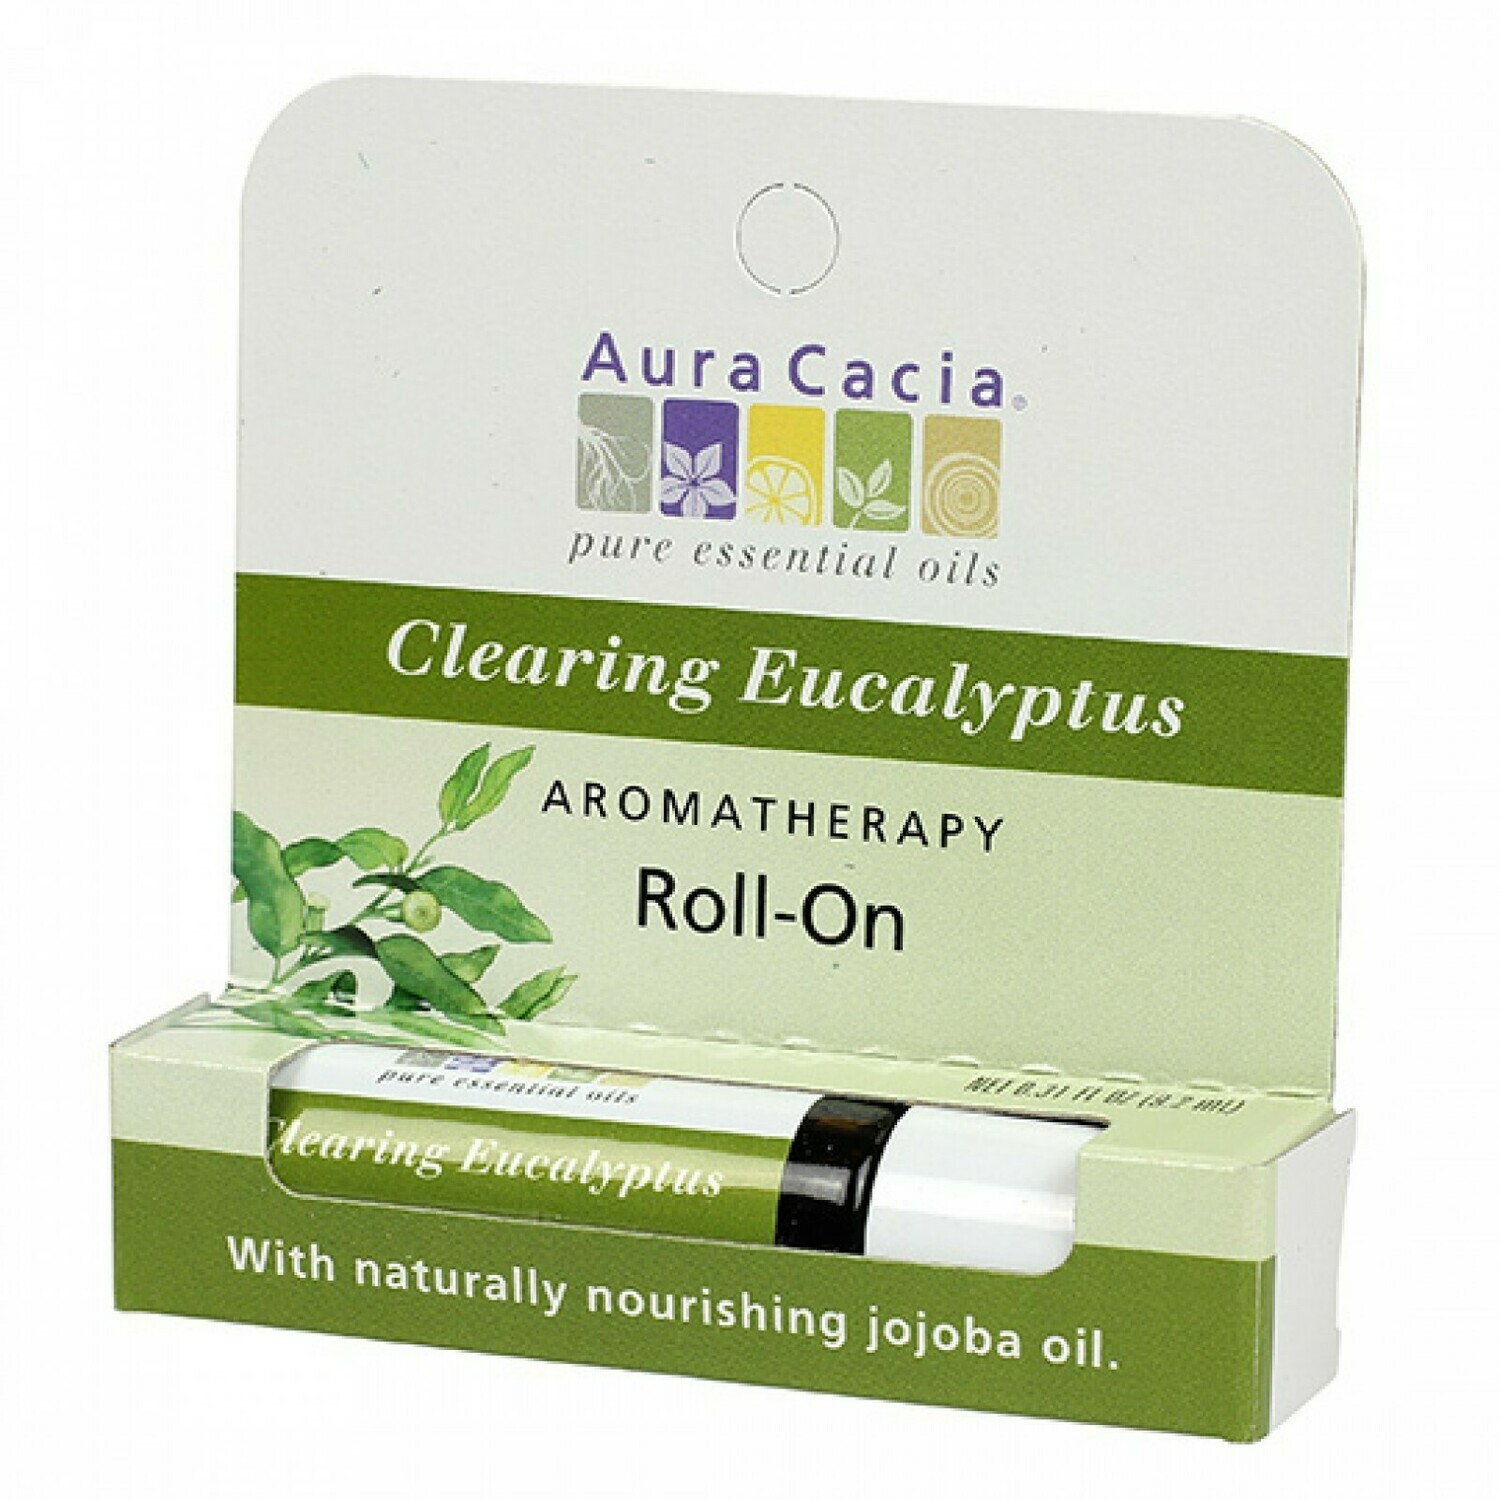 Roll-On Eucalyptus Oil